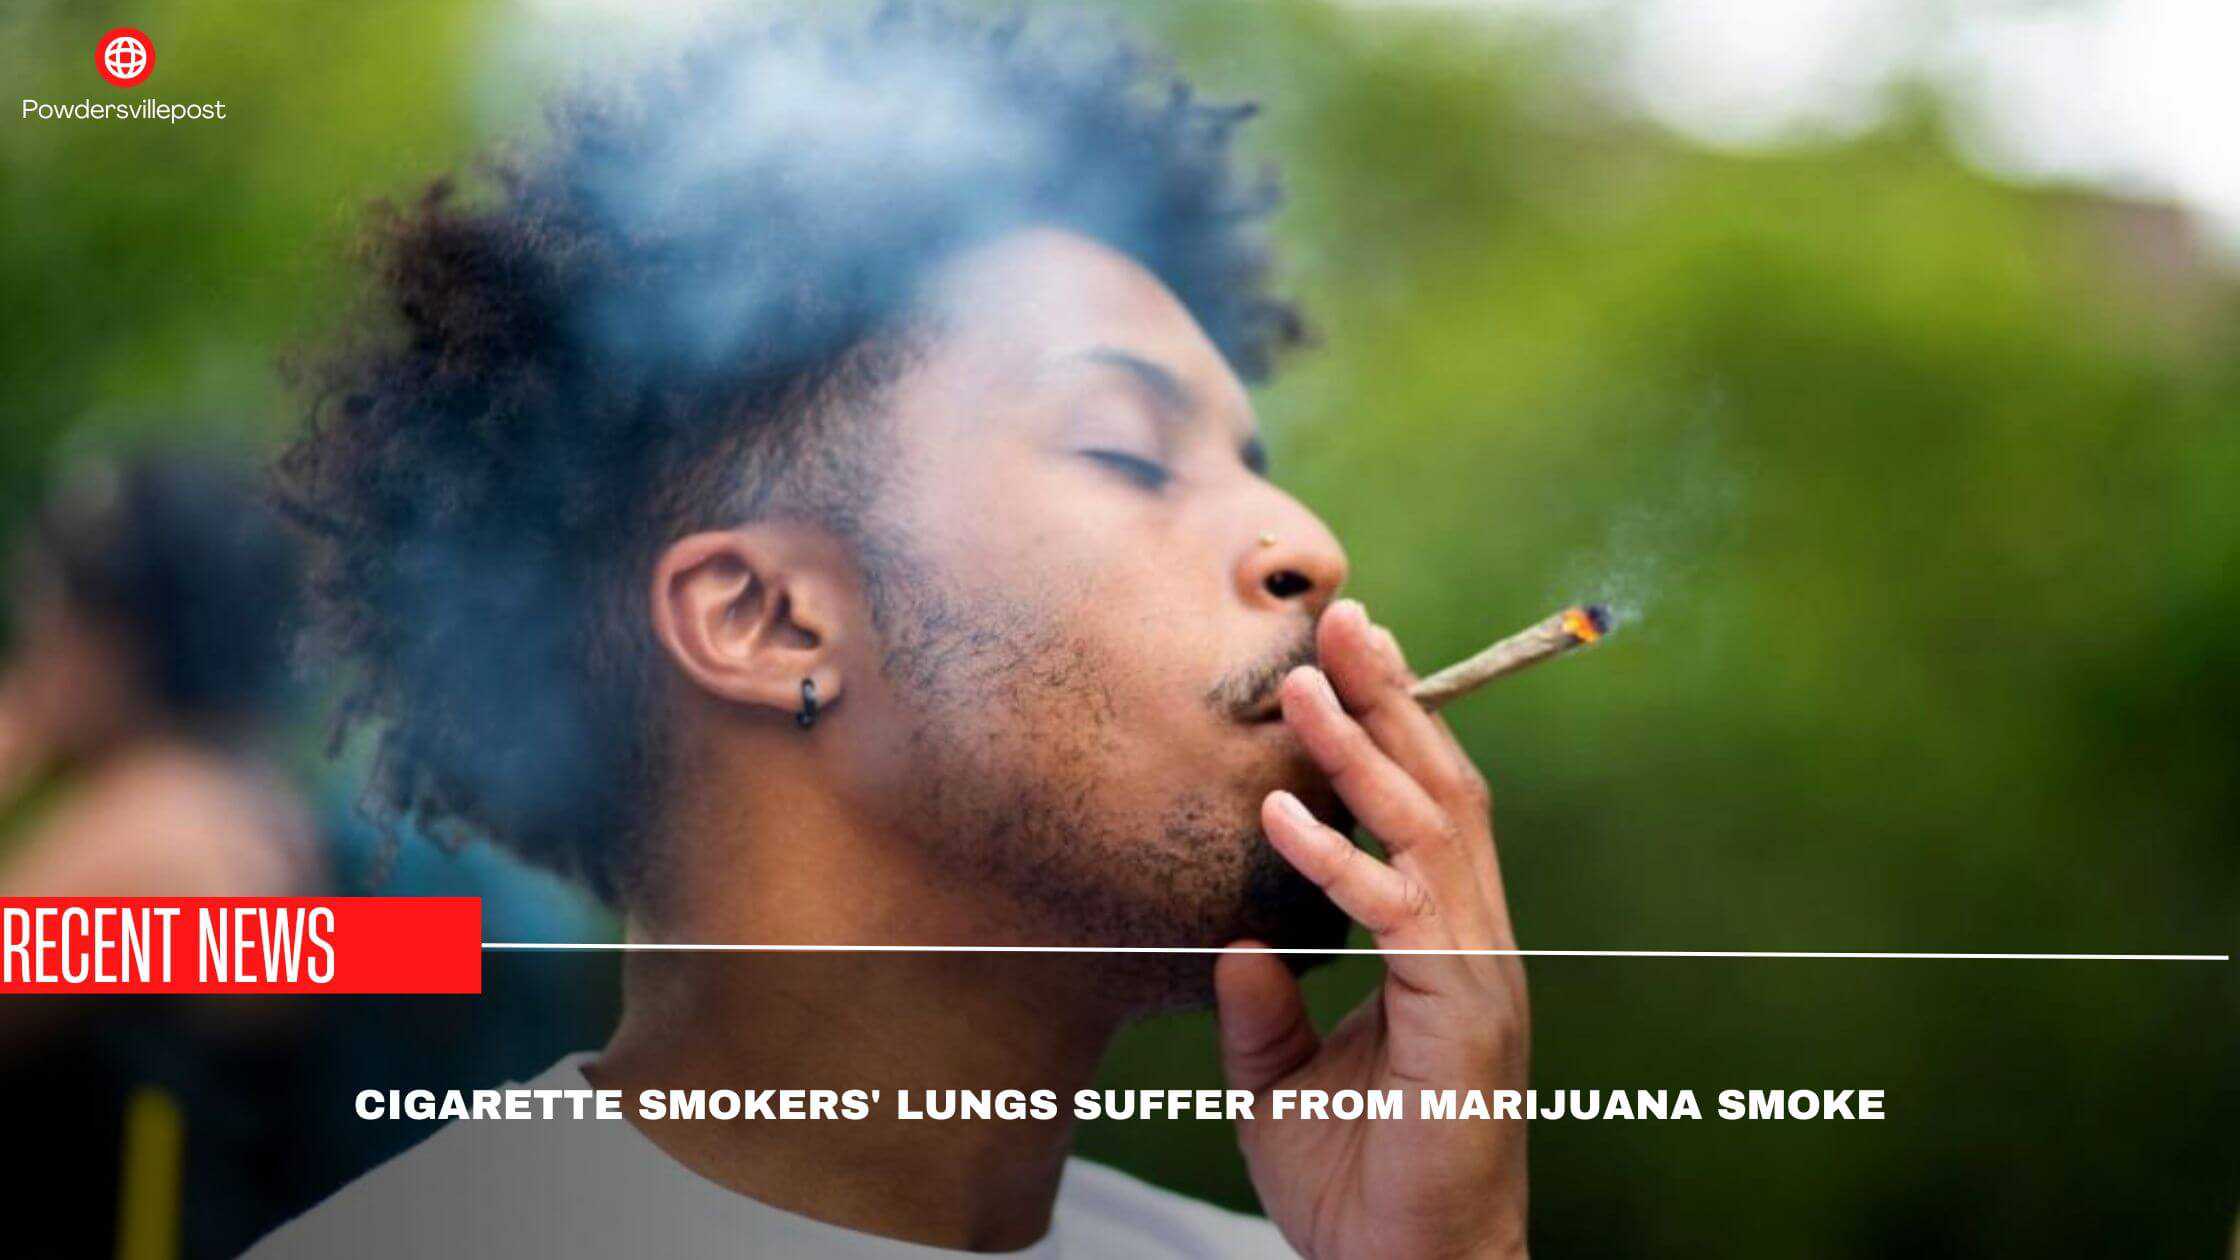 Cigarette Smokers' Lungs Suffer From Marijuana Smoke- Study Finds